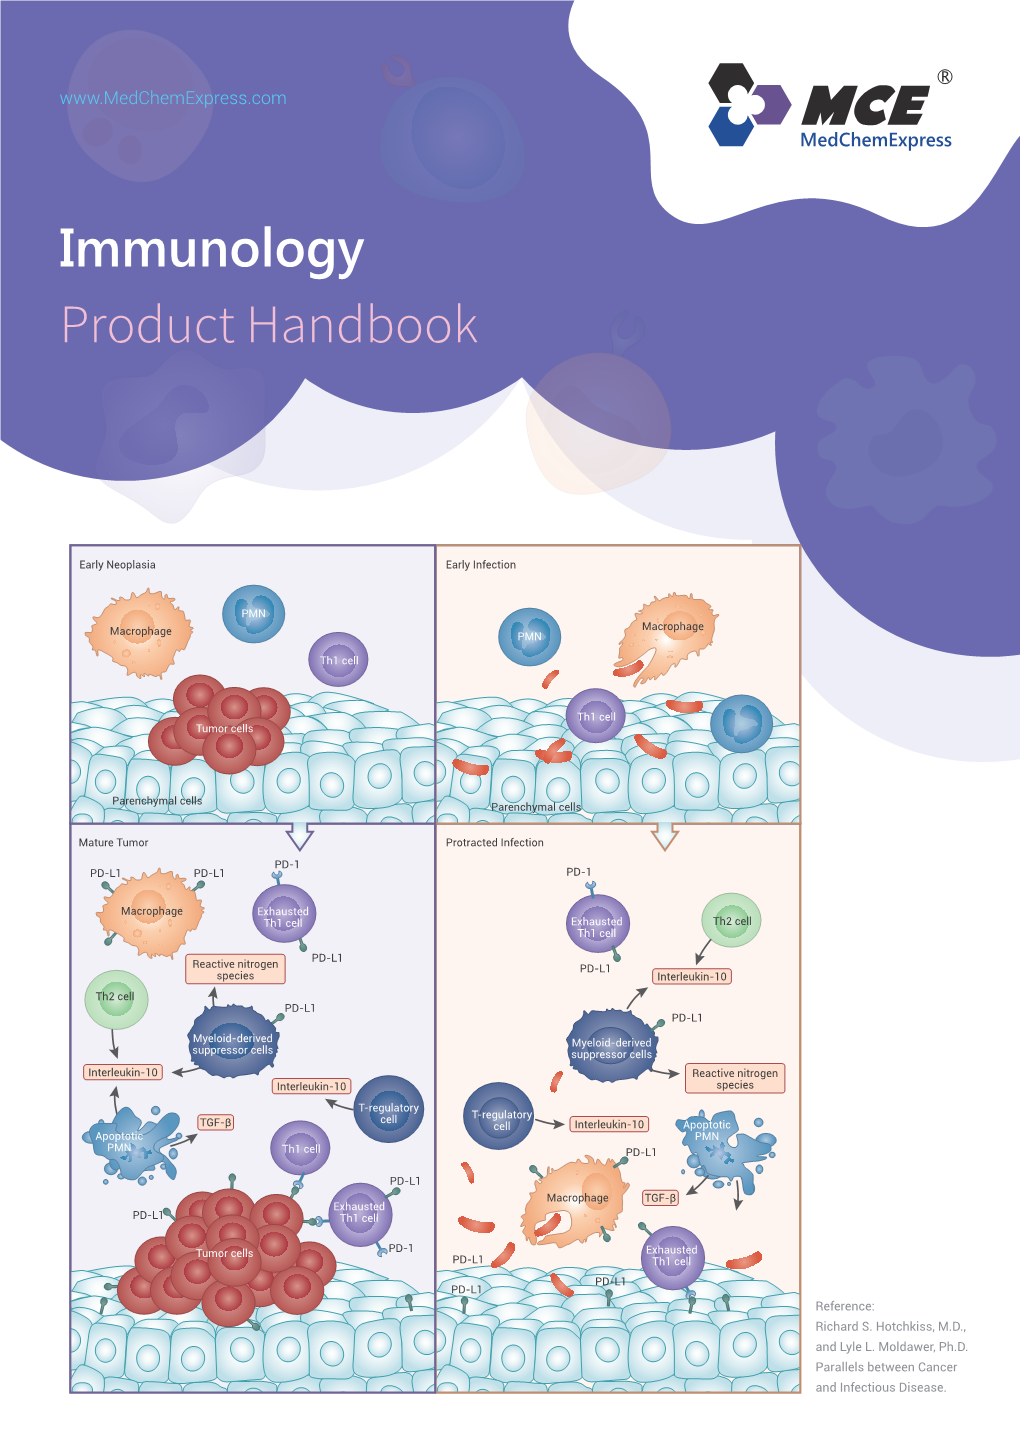 Immunology Product Handbook